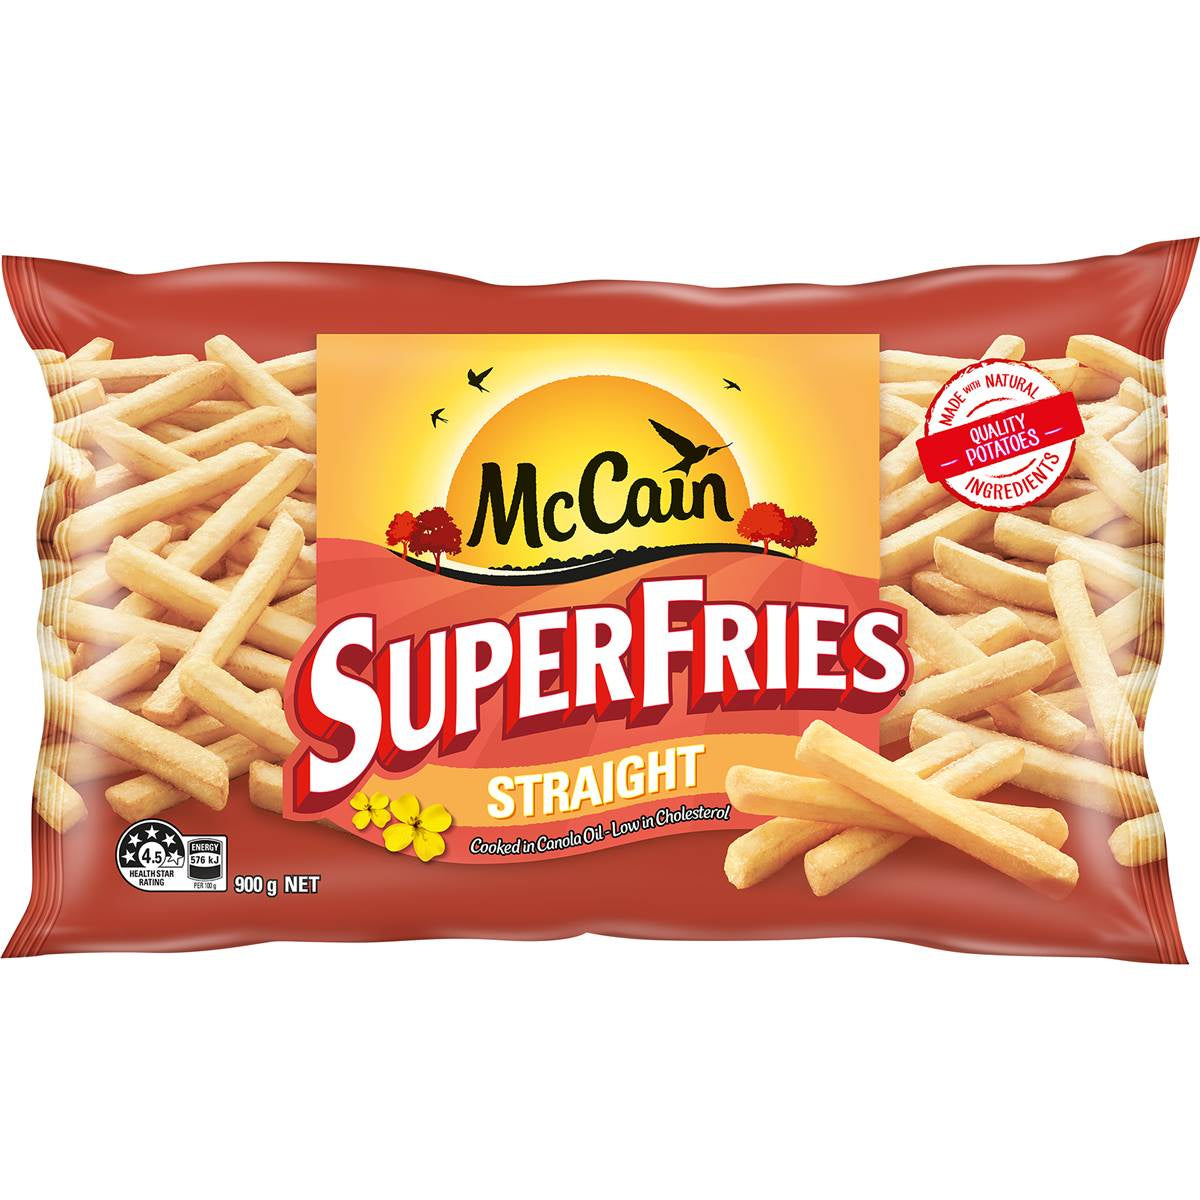 McCain Superfries Straight Cut Gluten Free 900g